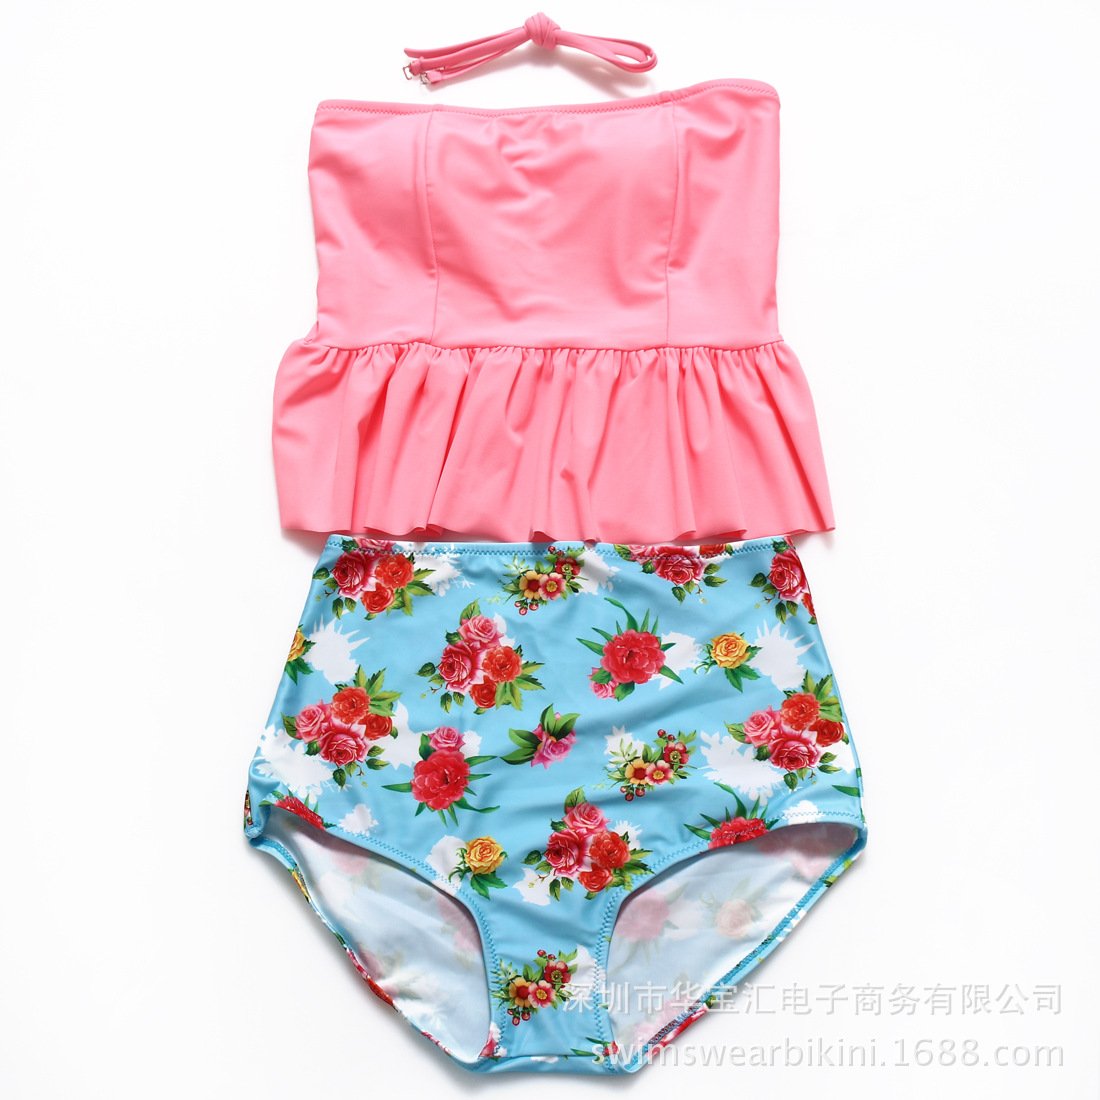 New Style Printed High Waist Bikini Set - Pink & Blue